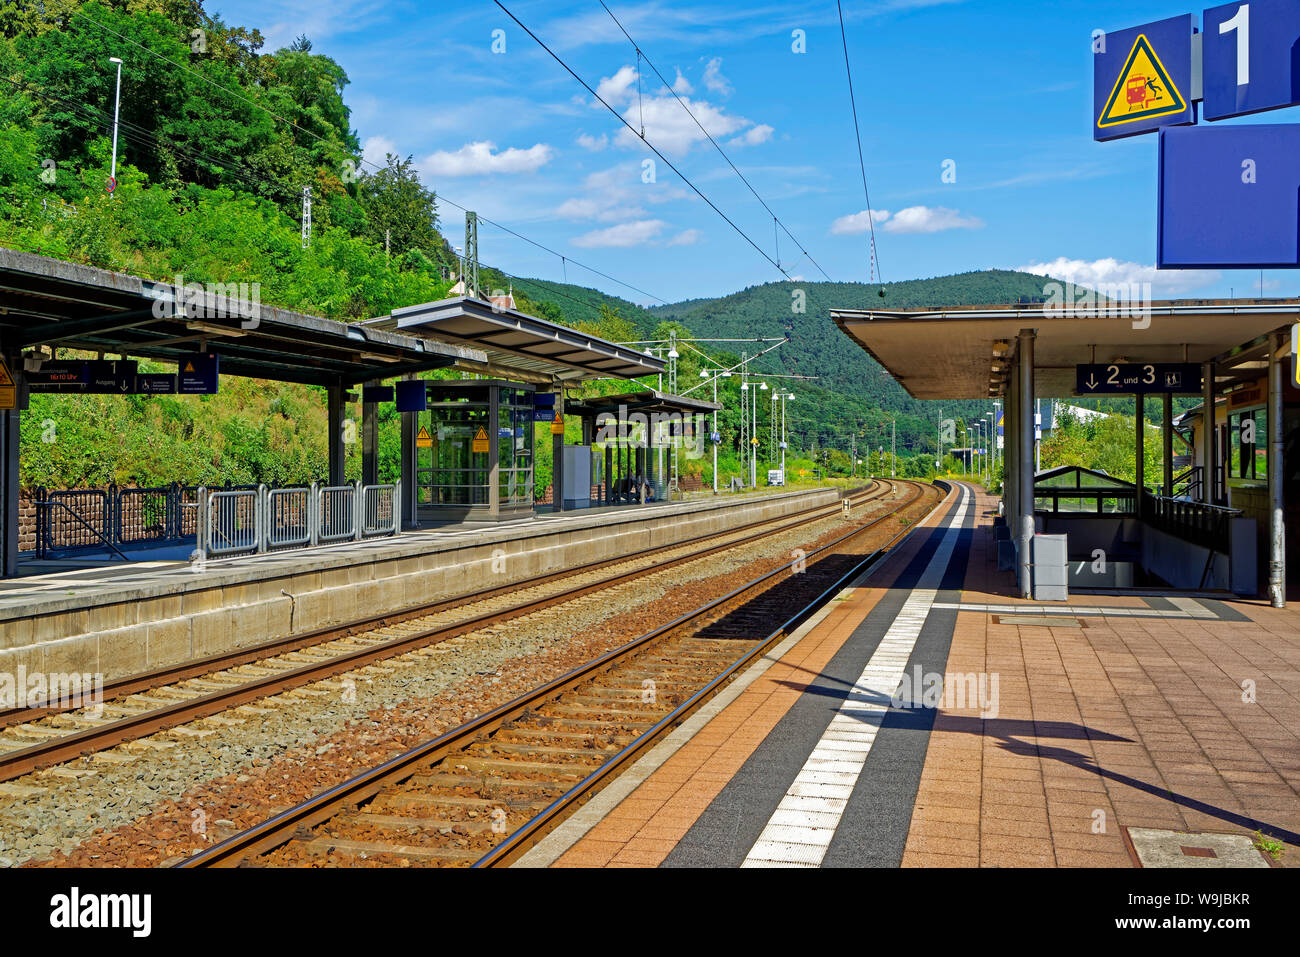 Bahnhof, Bahnsteige, Schienen Stock Photo - Alamy